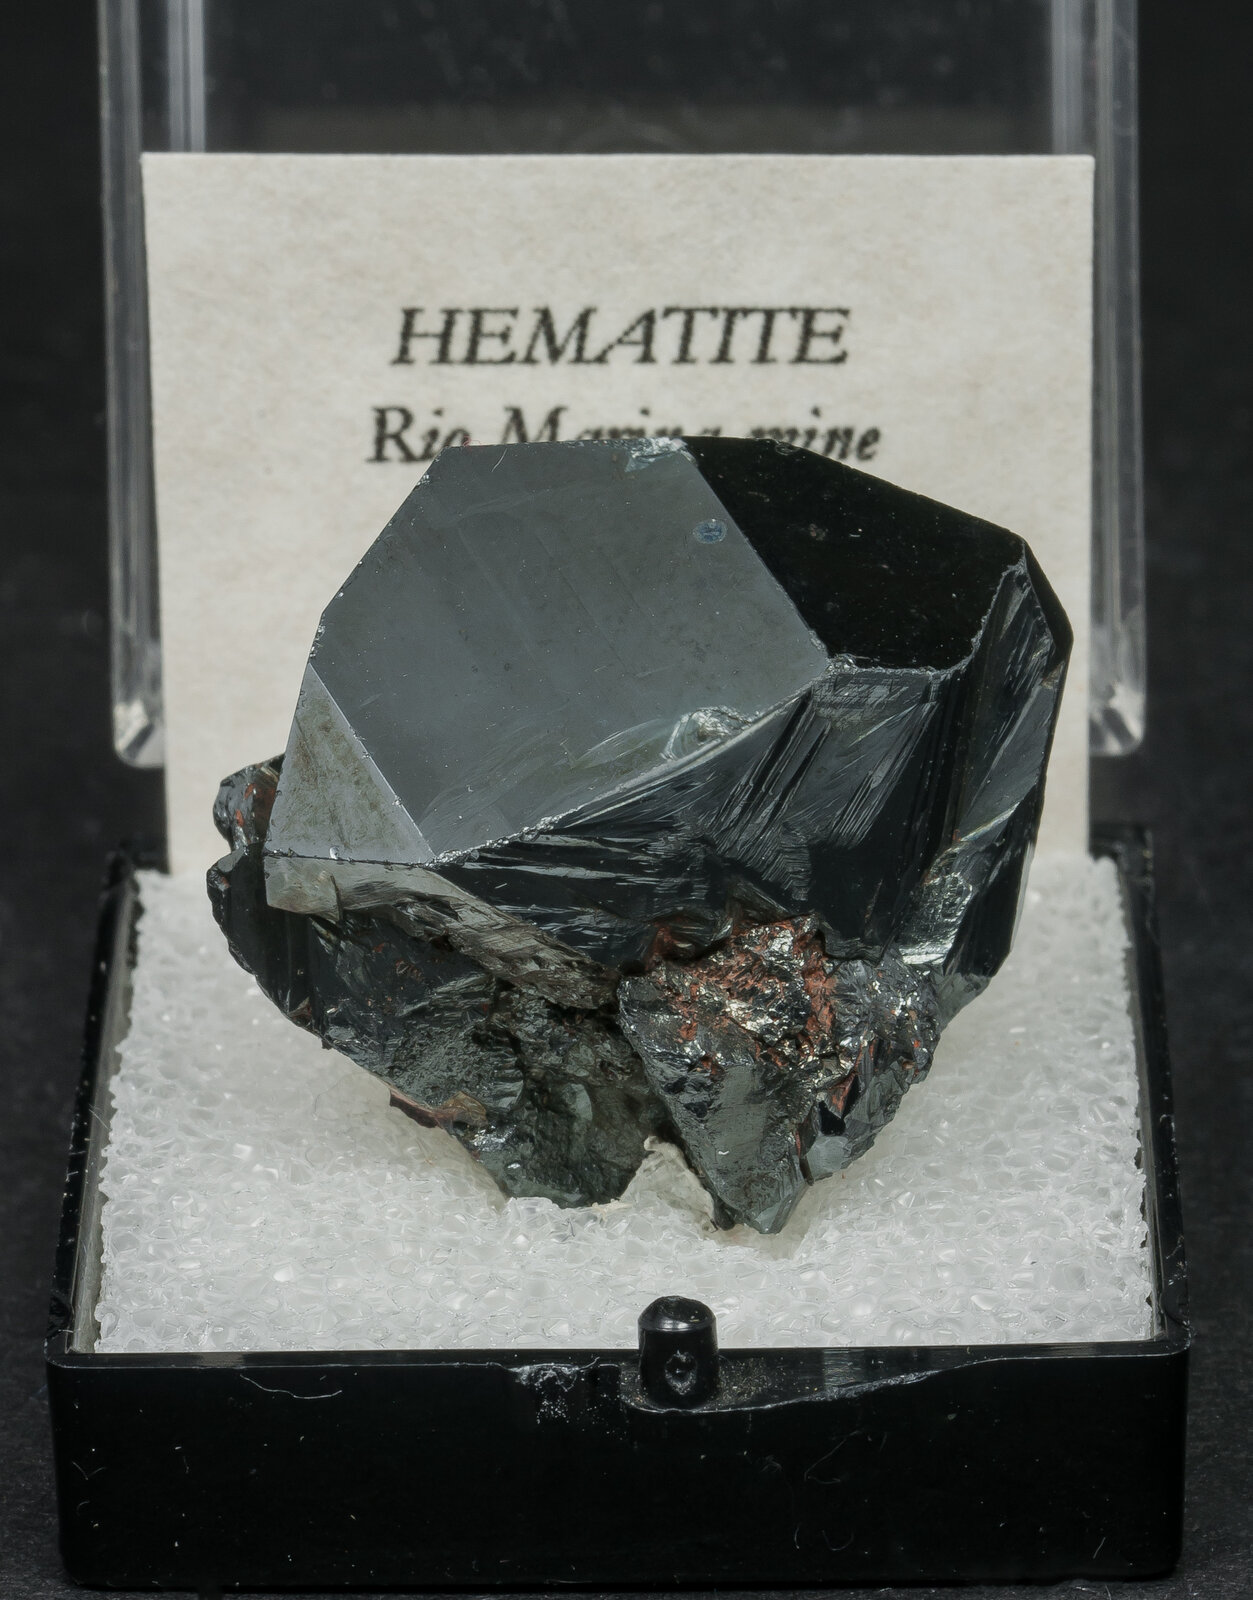 specimens/s_imagesAO4/Hematite-TLA11AO4f1.jpg